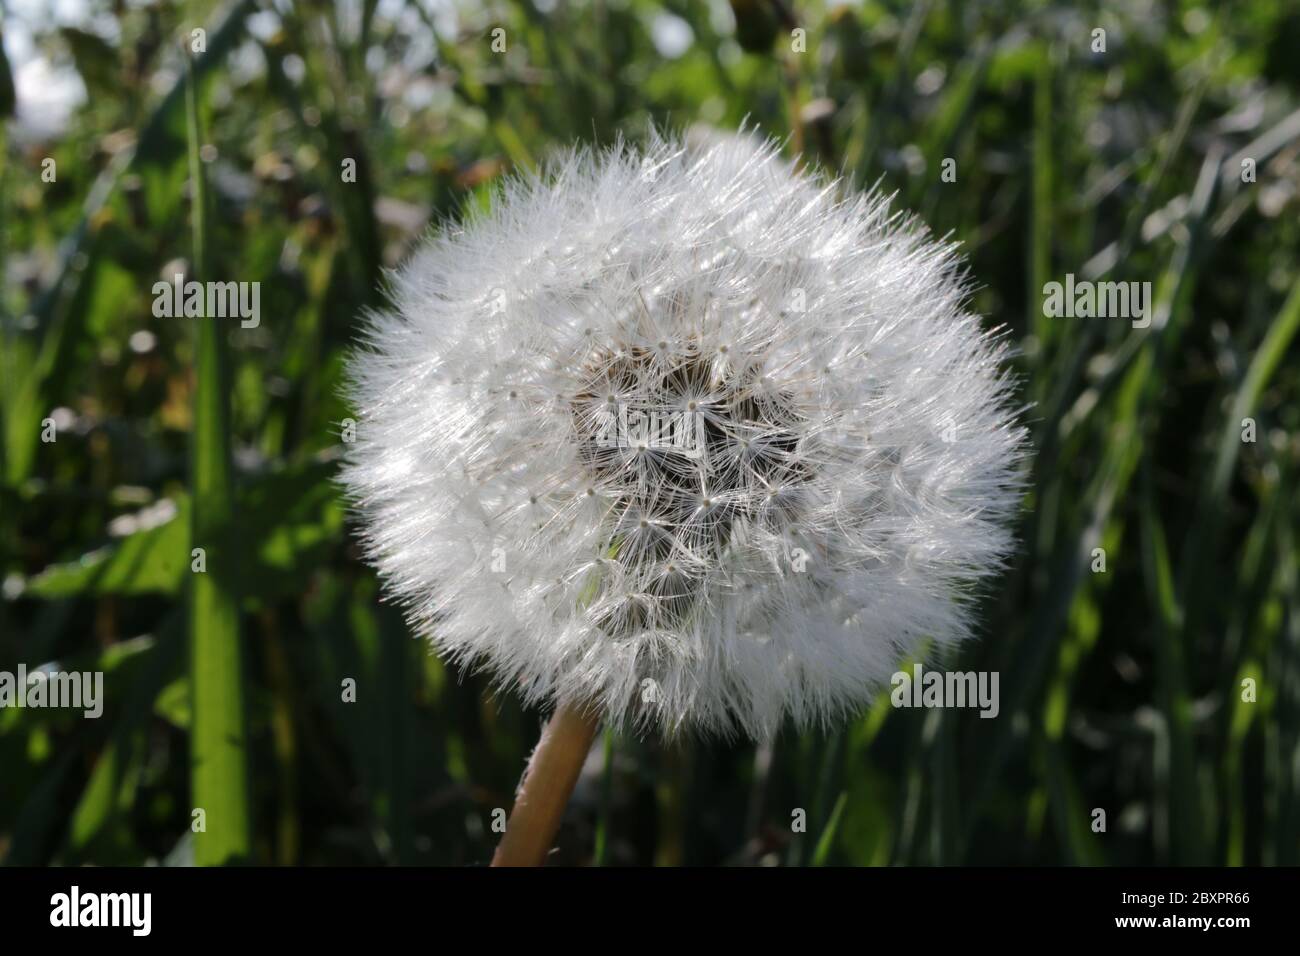 Dandelion seedhead, Taraxacum officinalis Stock Photo